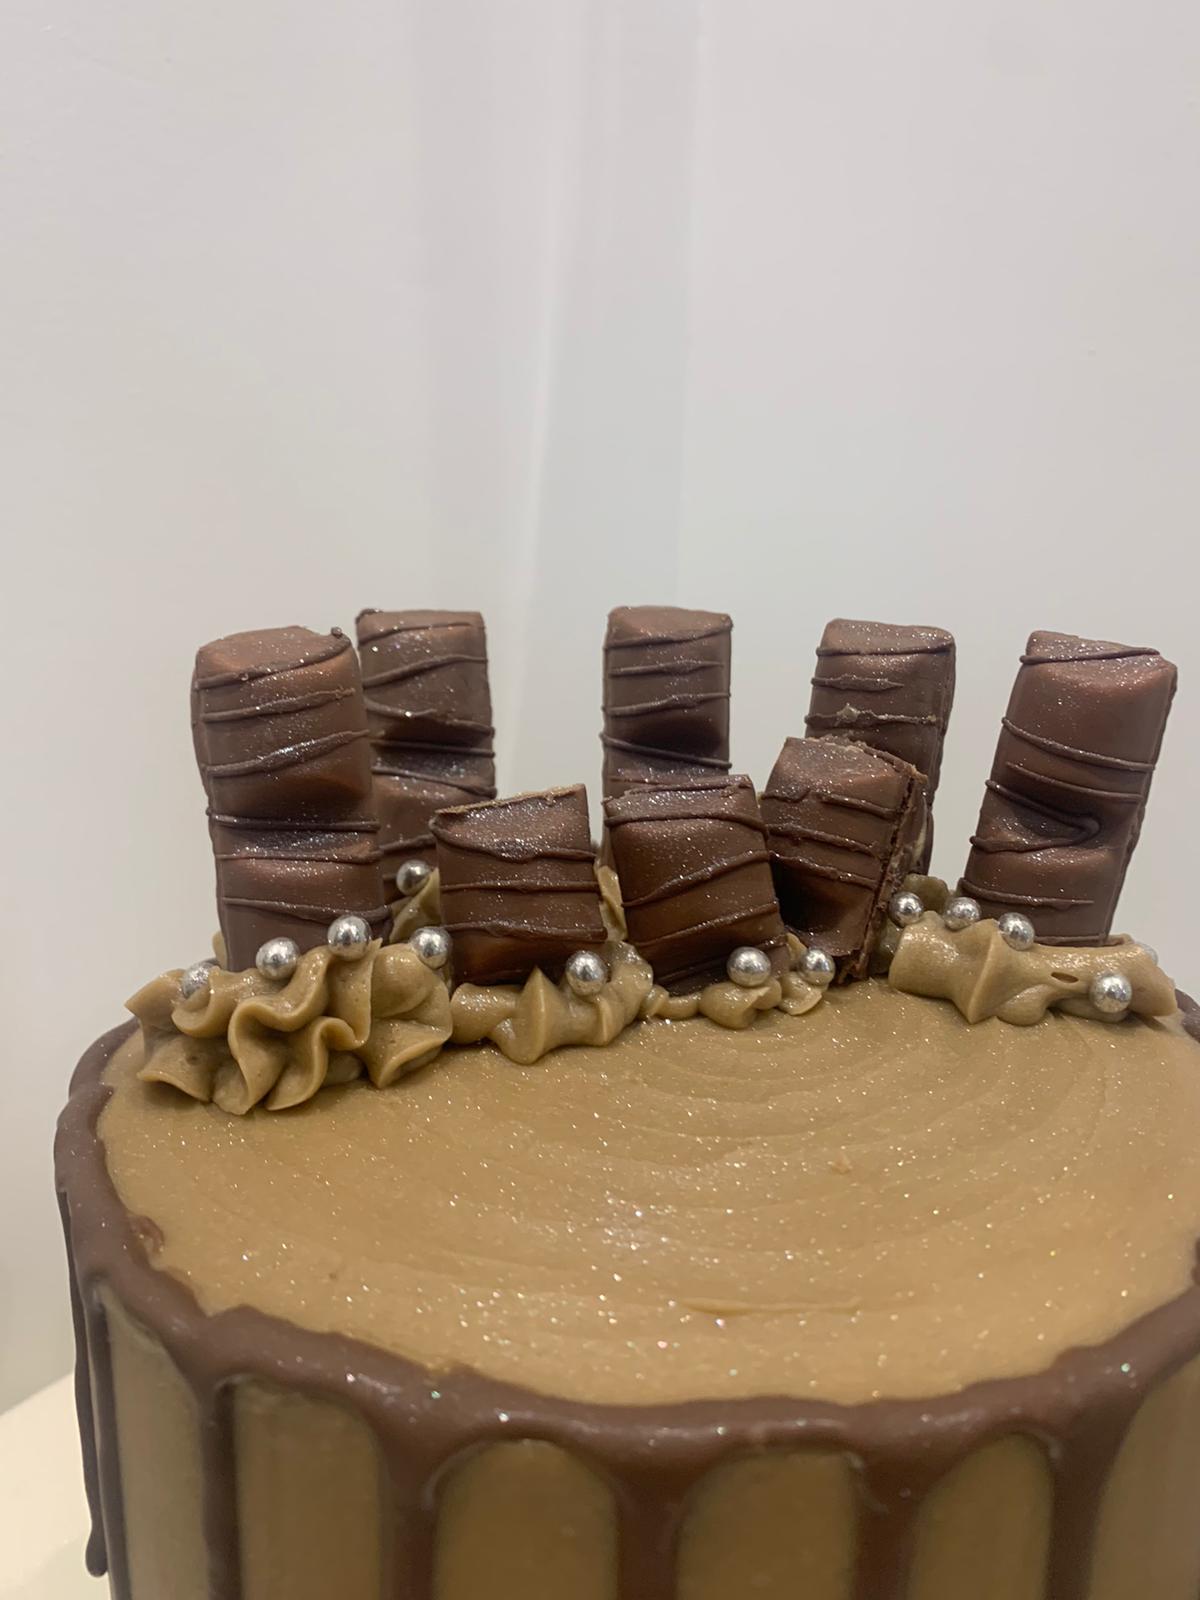 KINDER BUENO CHOCOLATE CAKE